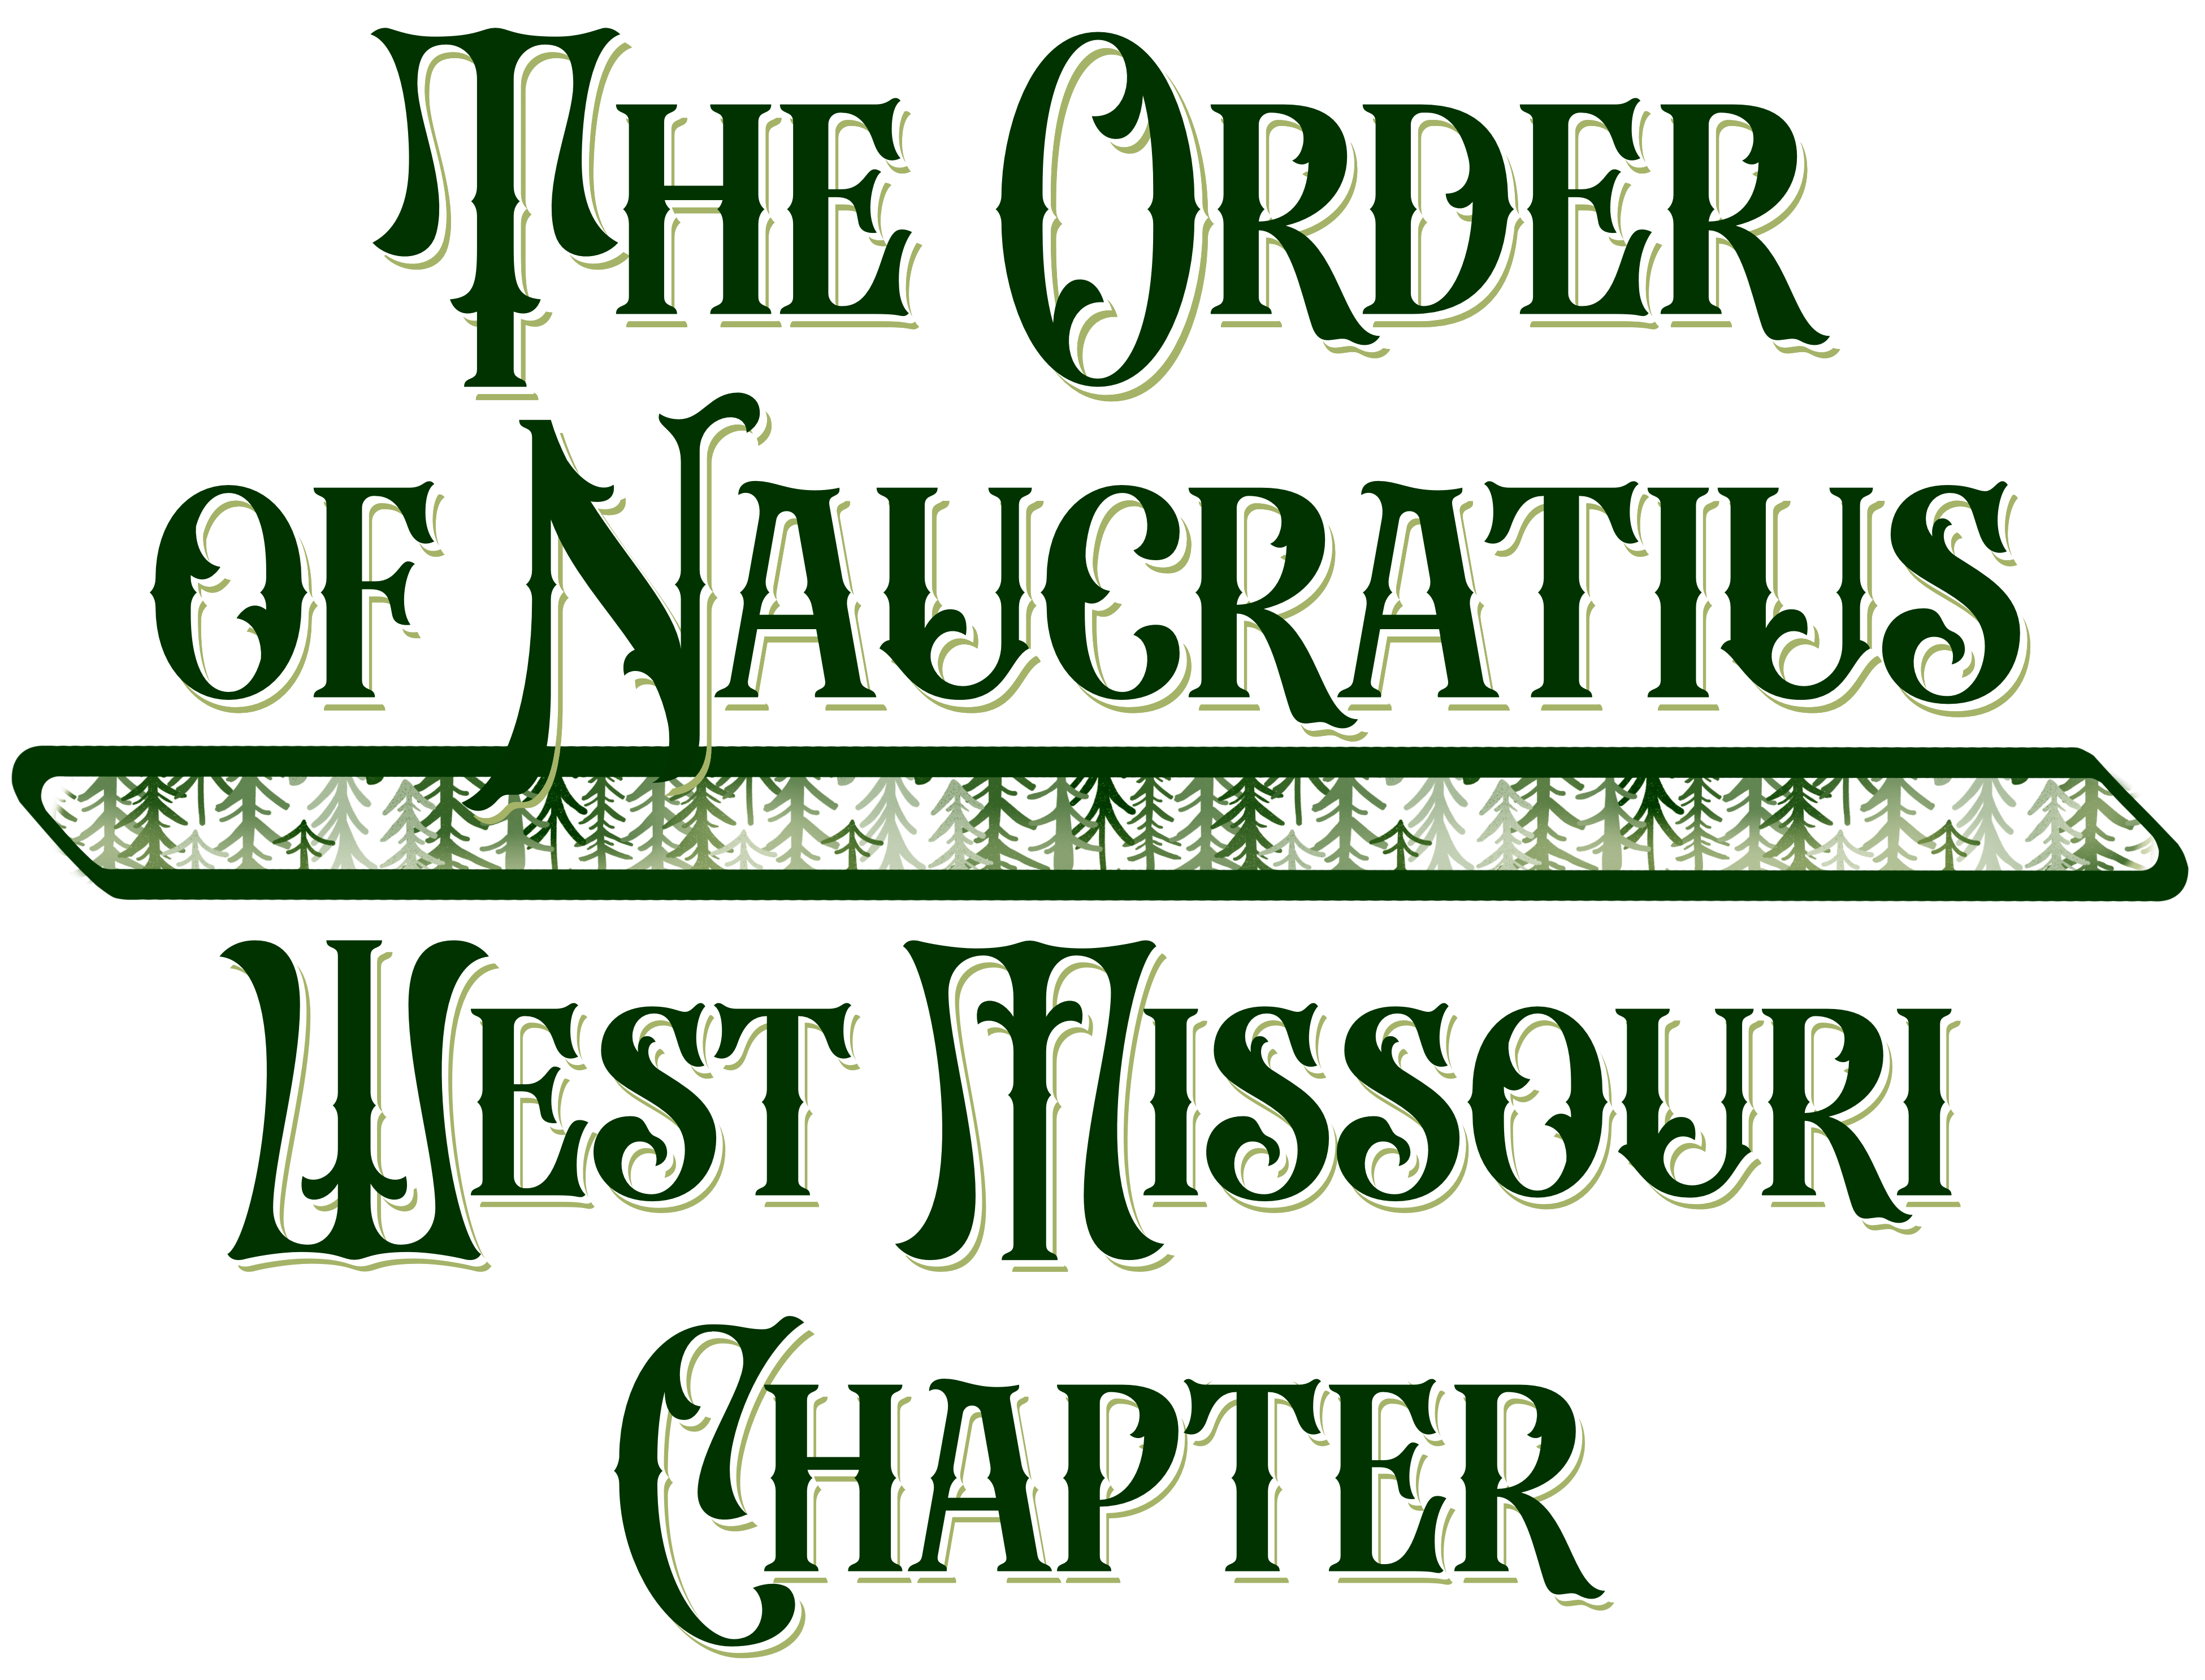 Order of Naucratius Text_NoBackground-min